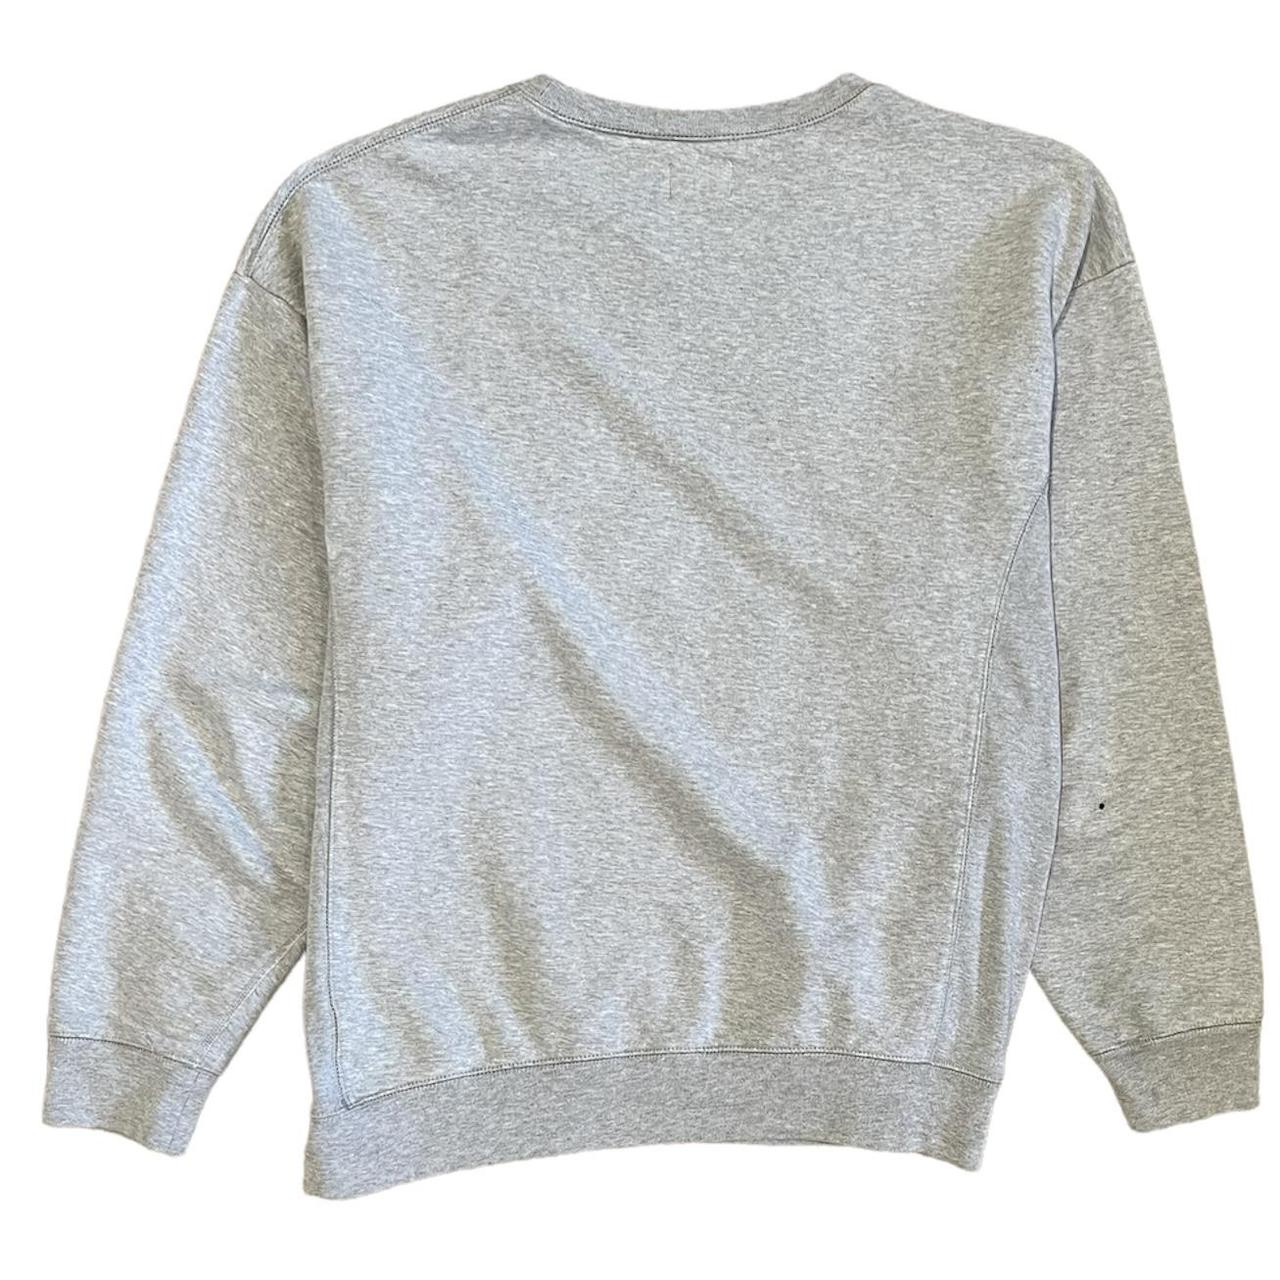 Patta Men's Grey and White Sweatshirt | Depop